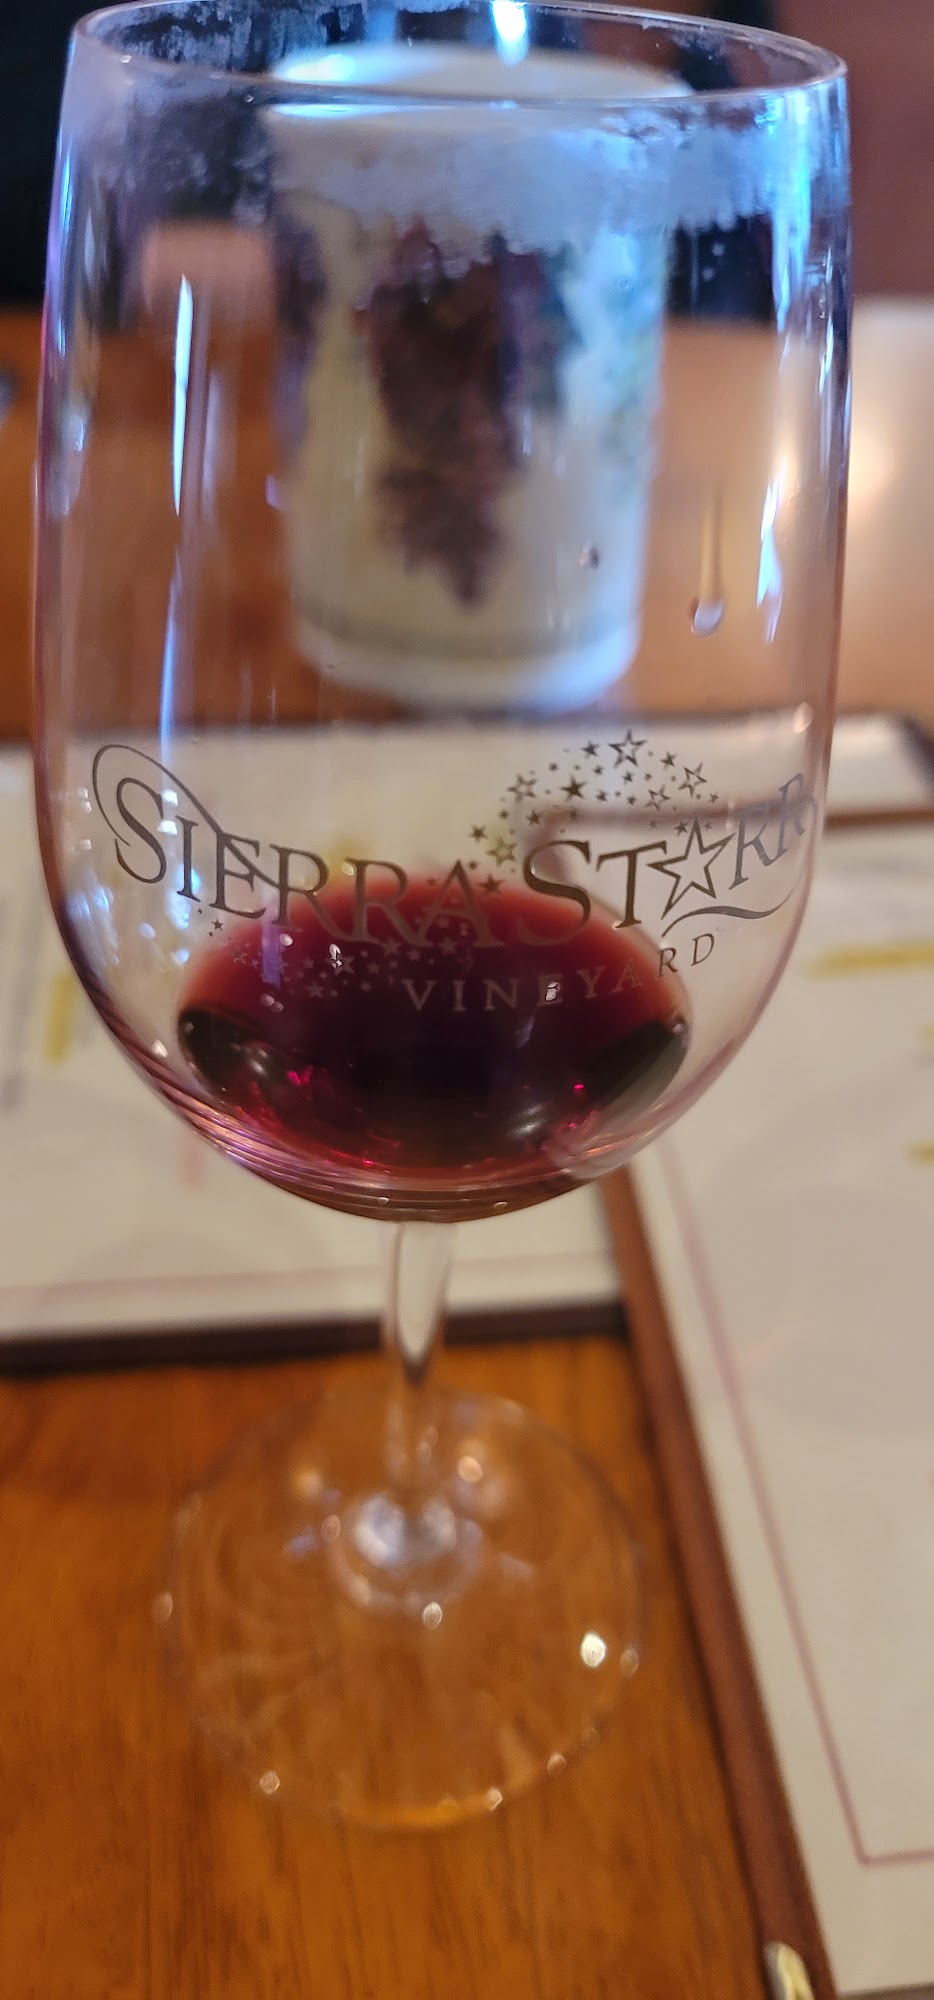 Sierra Starr Vineyard & Winery